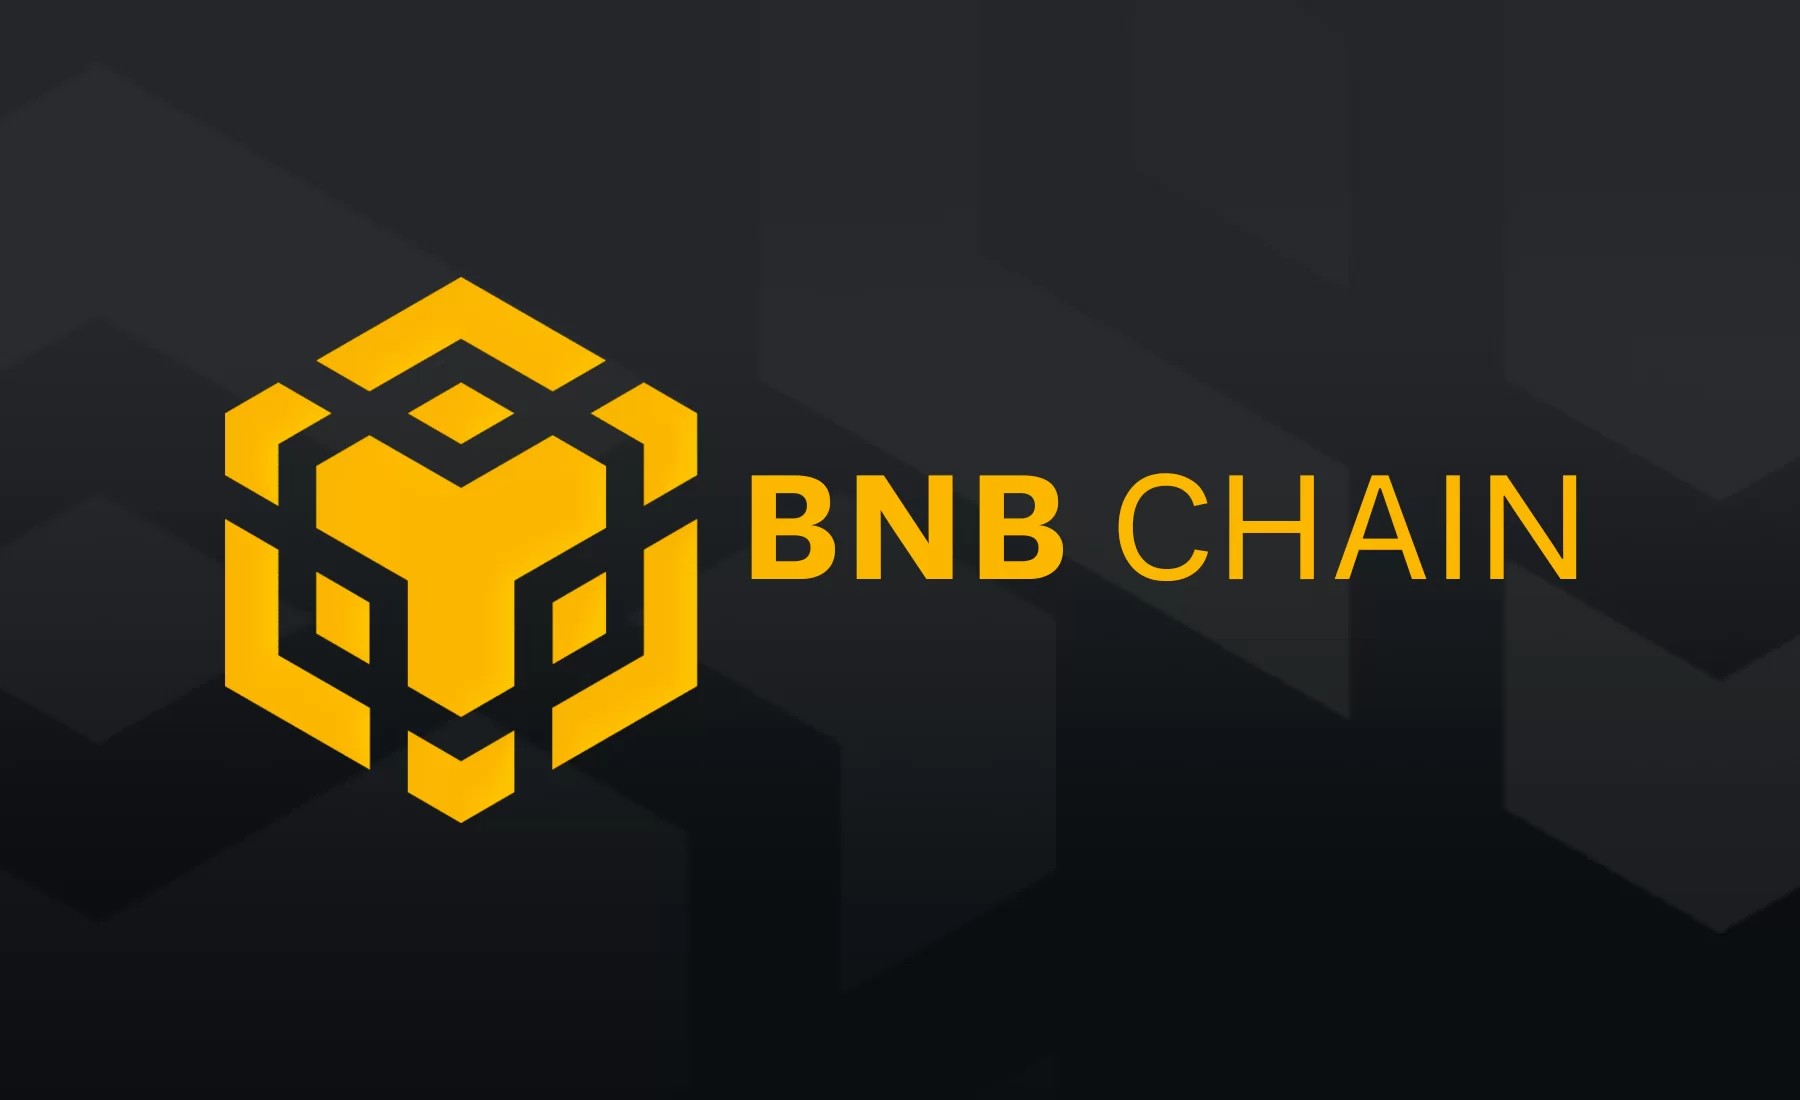 bnb chain 10 milyon dolarlik fon baslattias